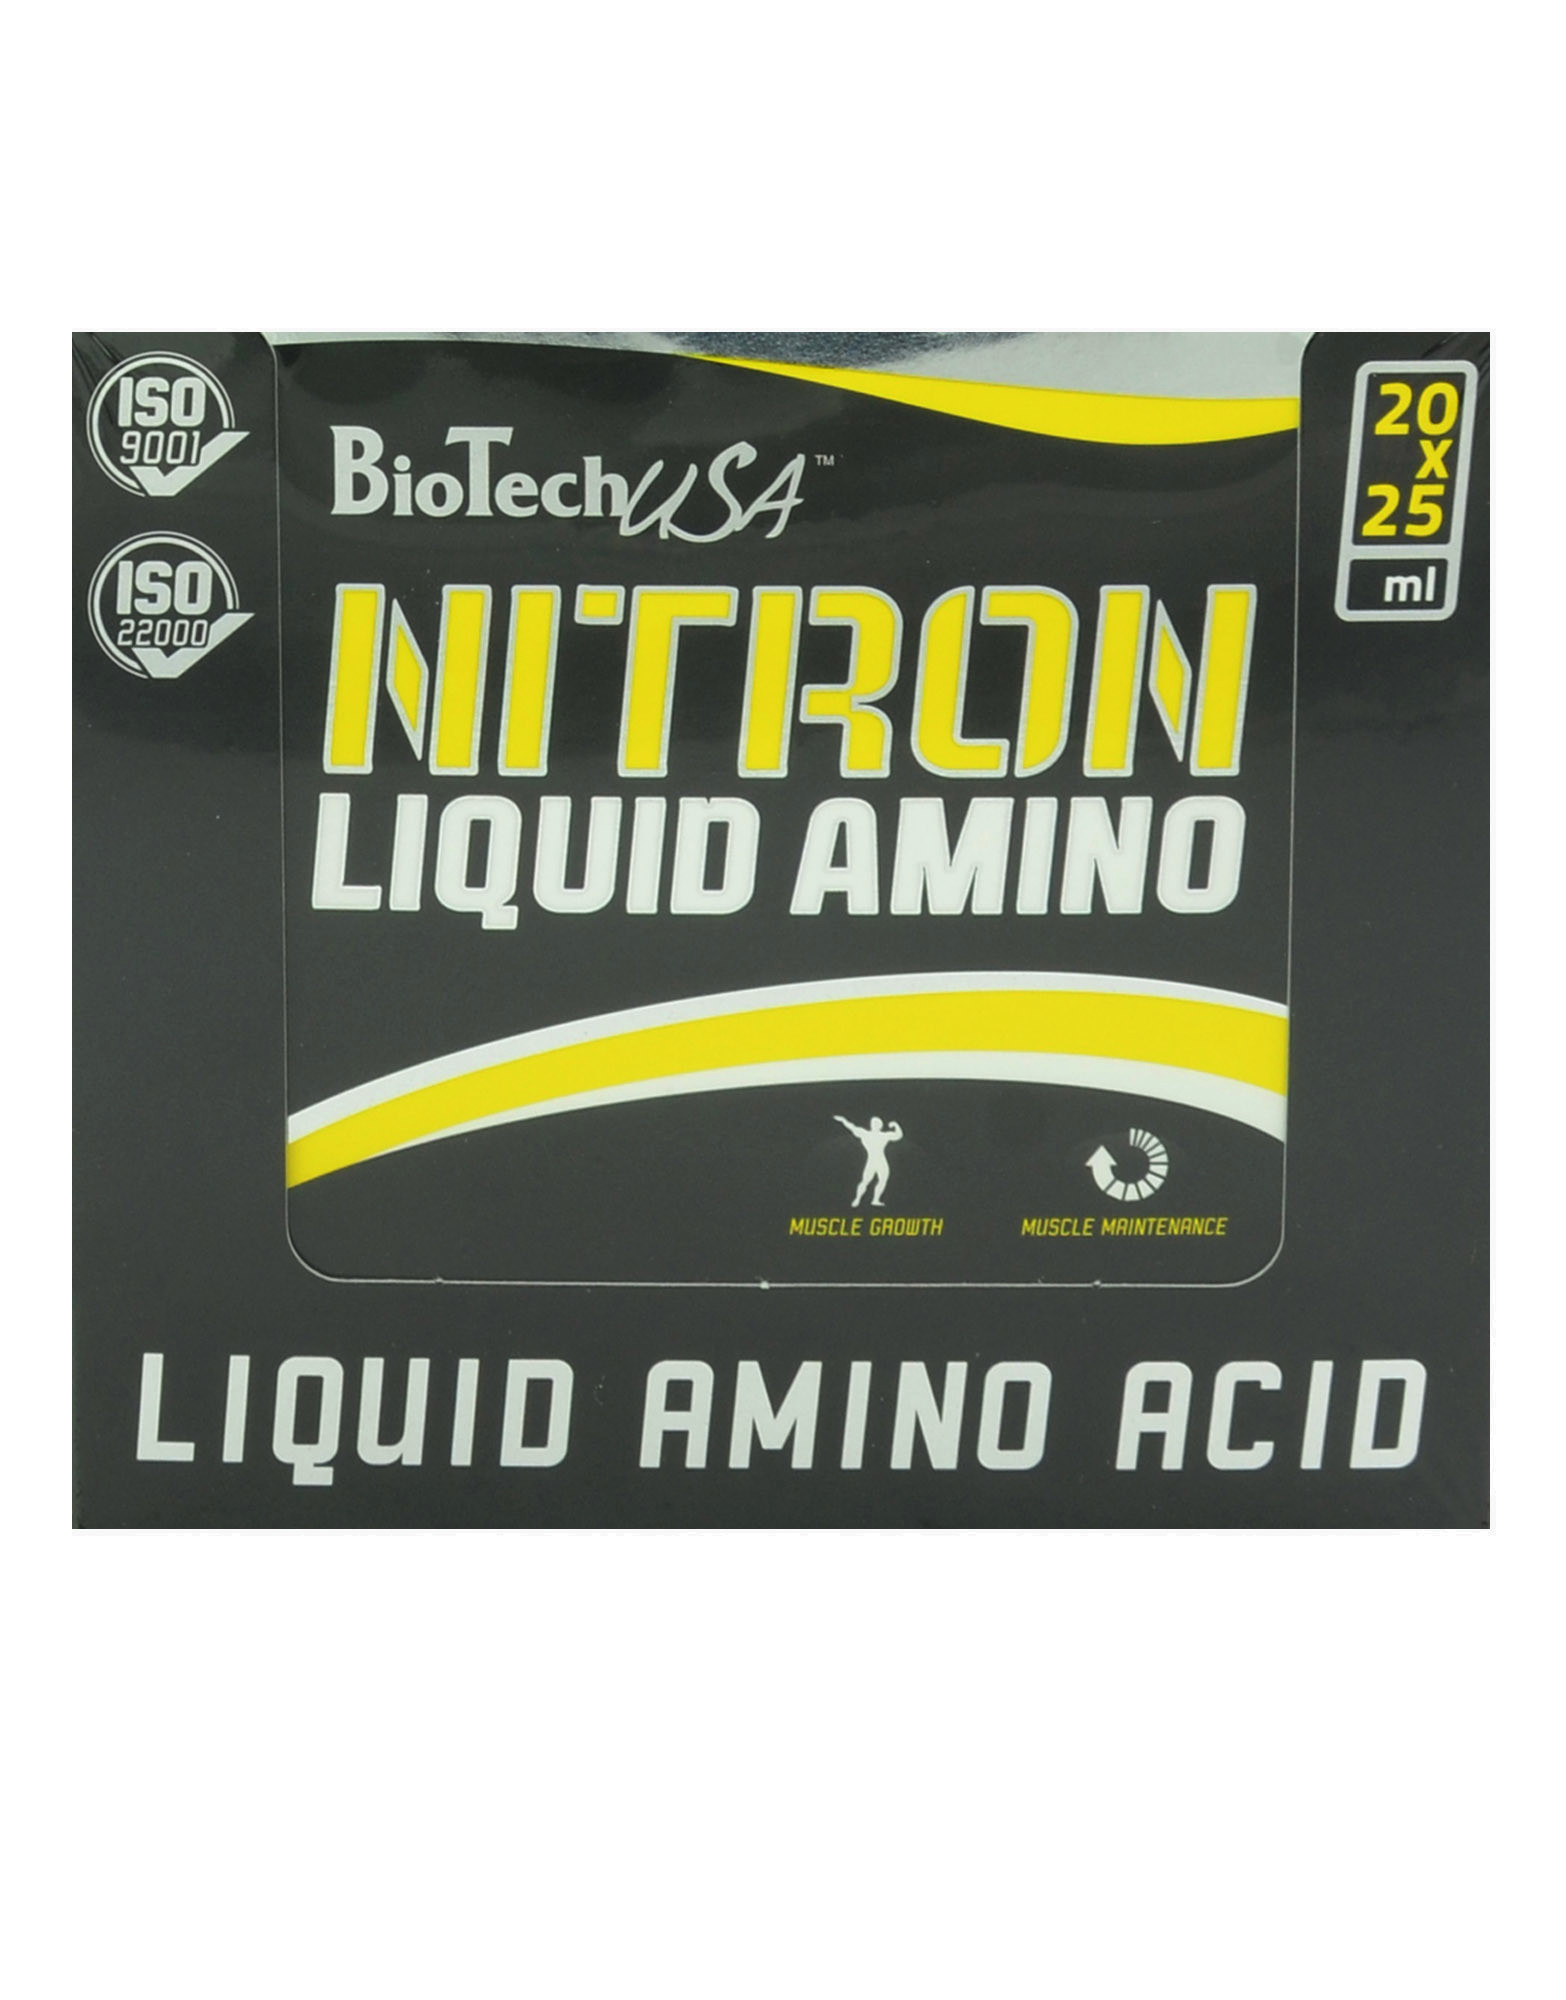 Nitron Liquid Amino By Biotech Usa 20 Ampoules Of 25ml